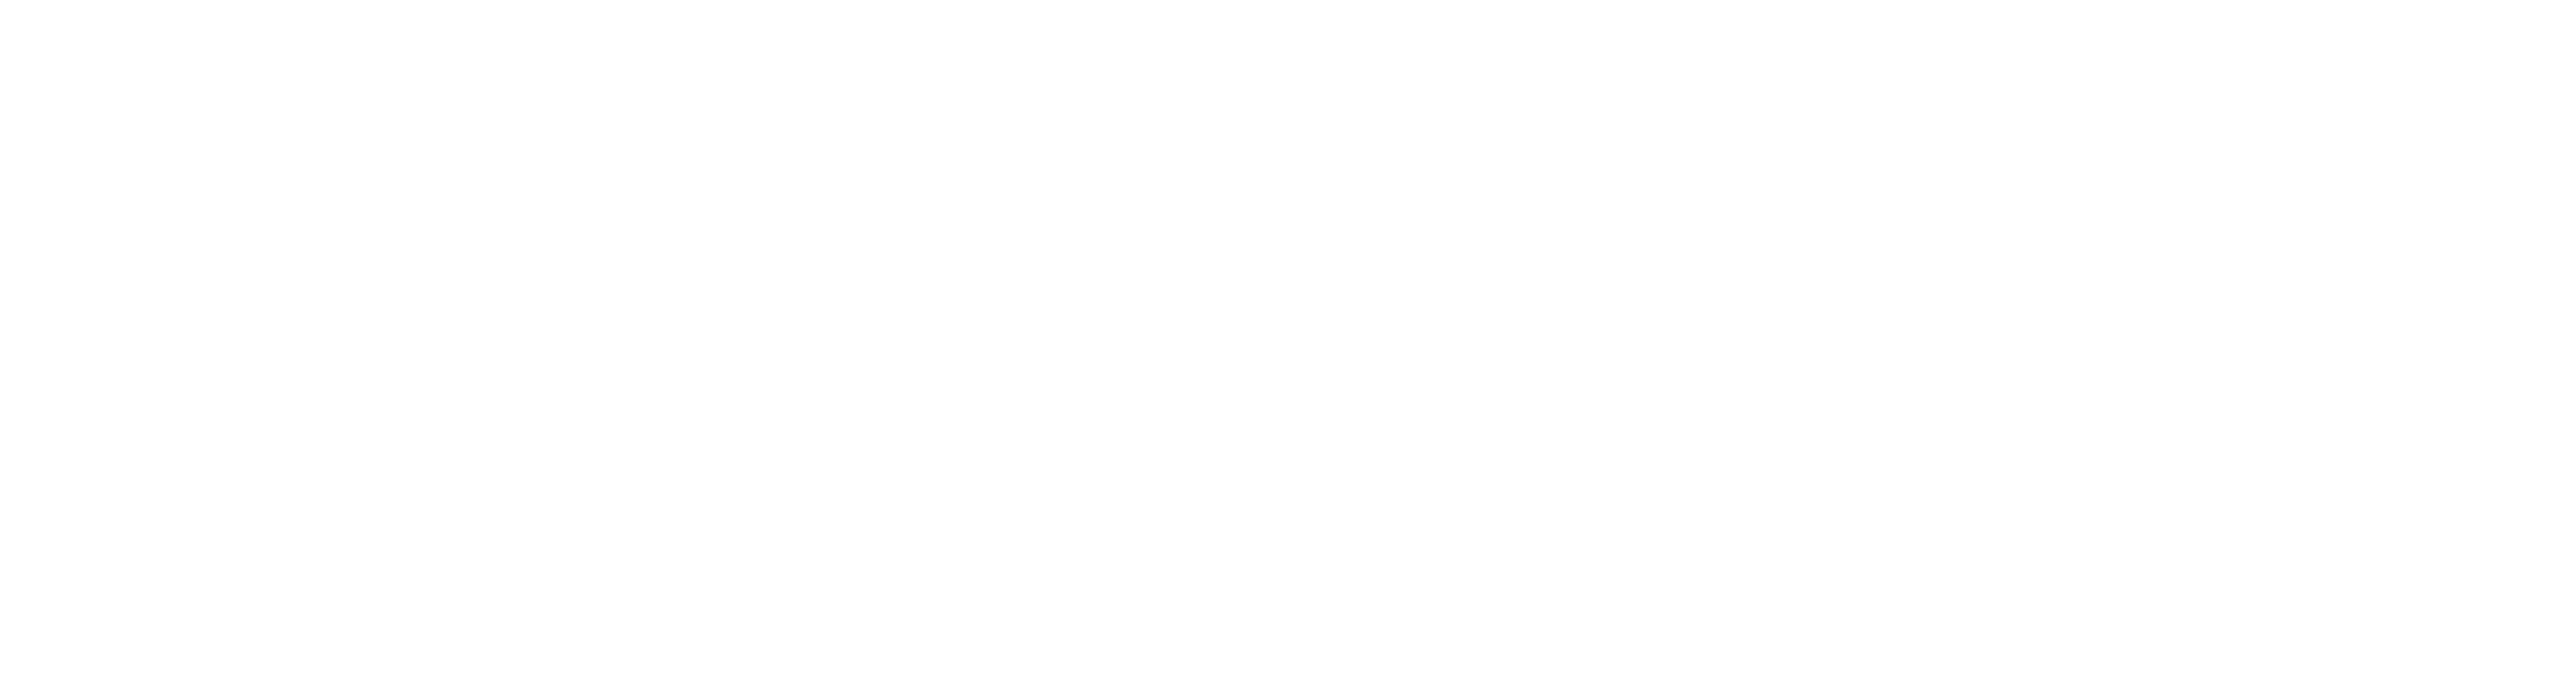 Greater Vancouver Roller Derby Association